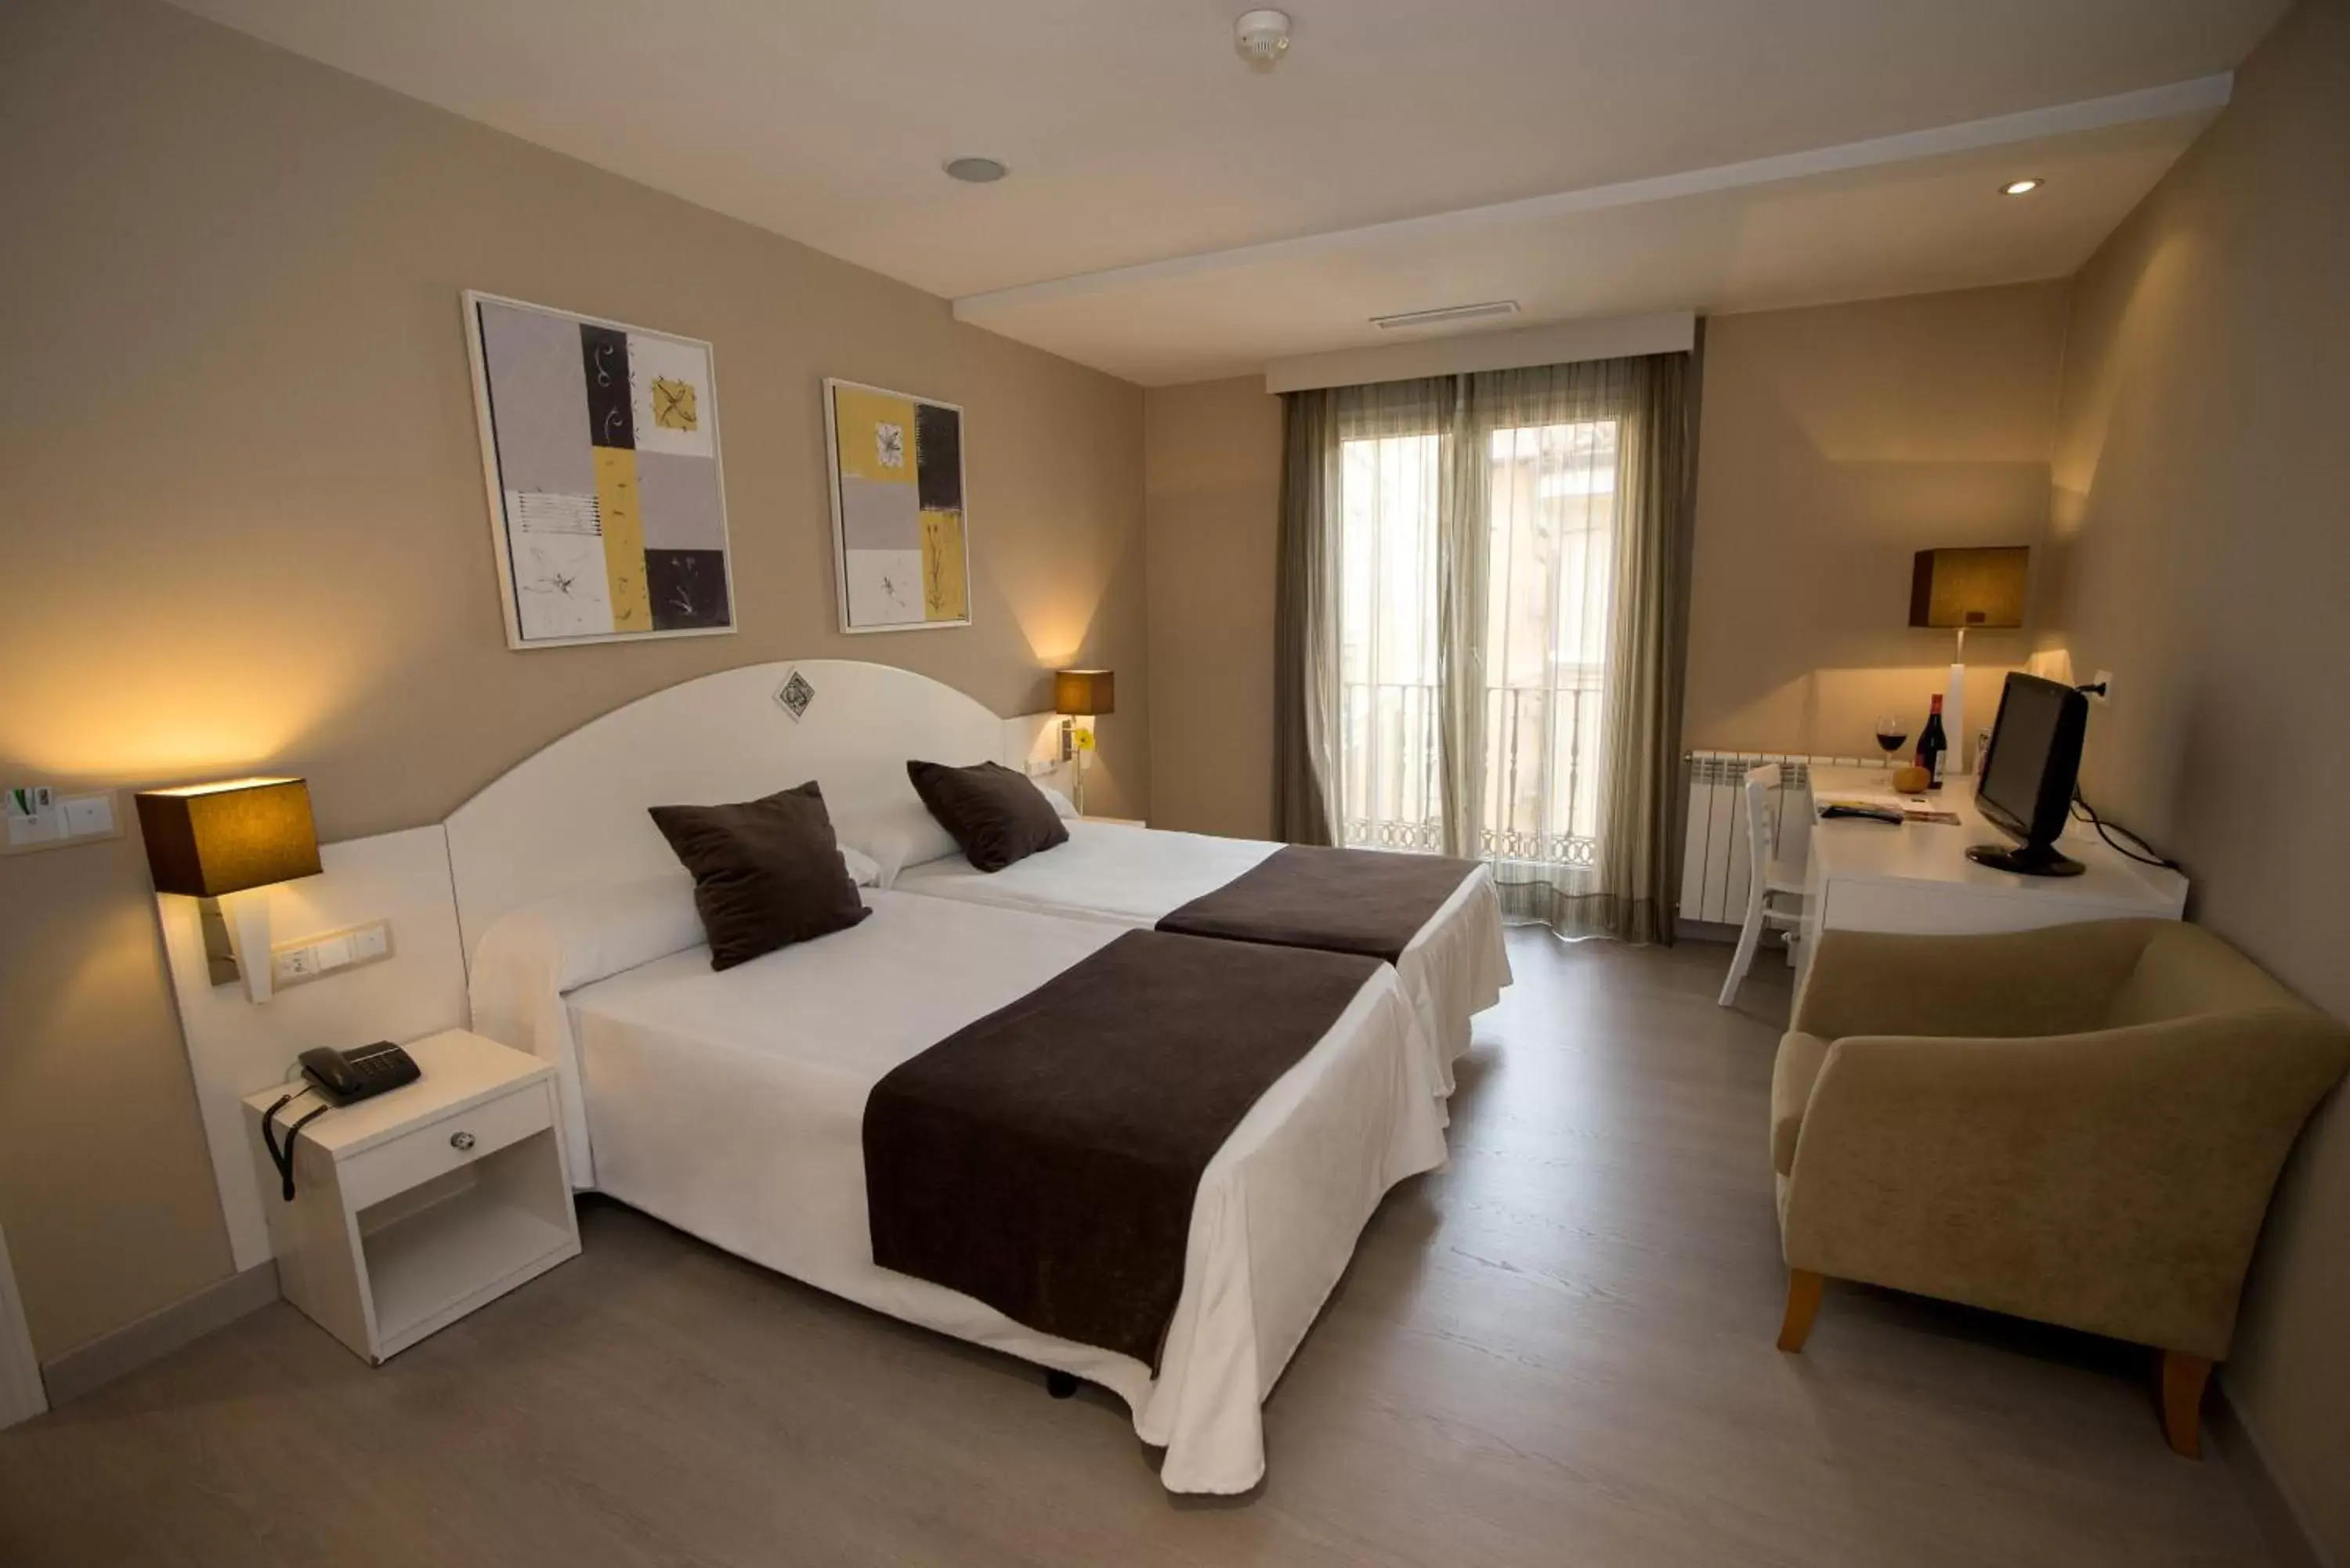 Bed, Room Photo in Sercotel Torico Plaza